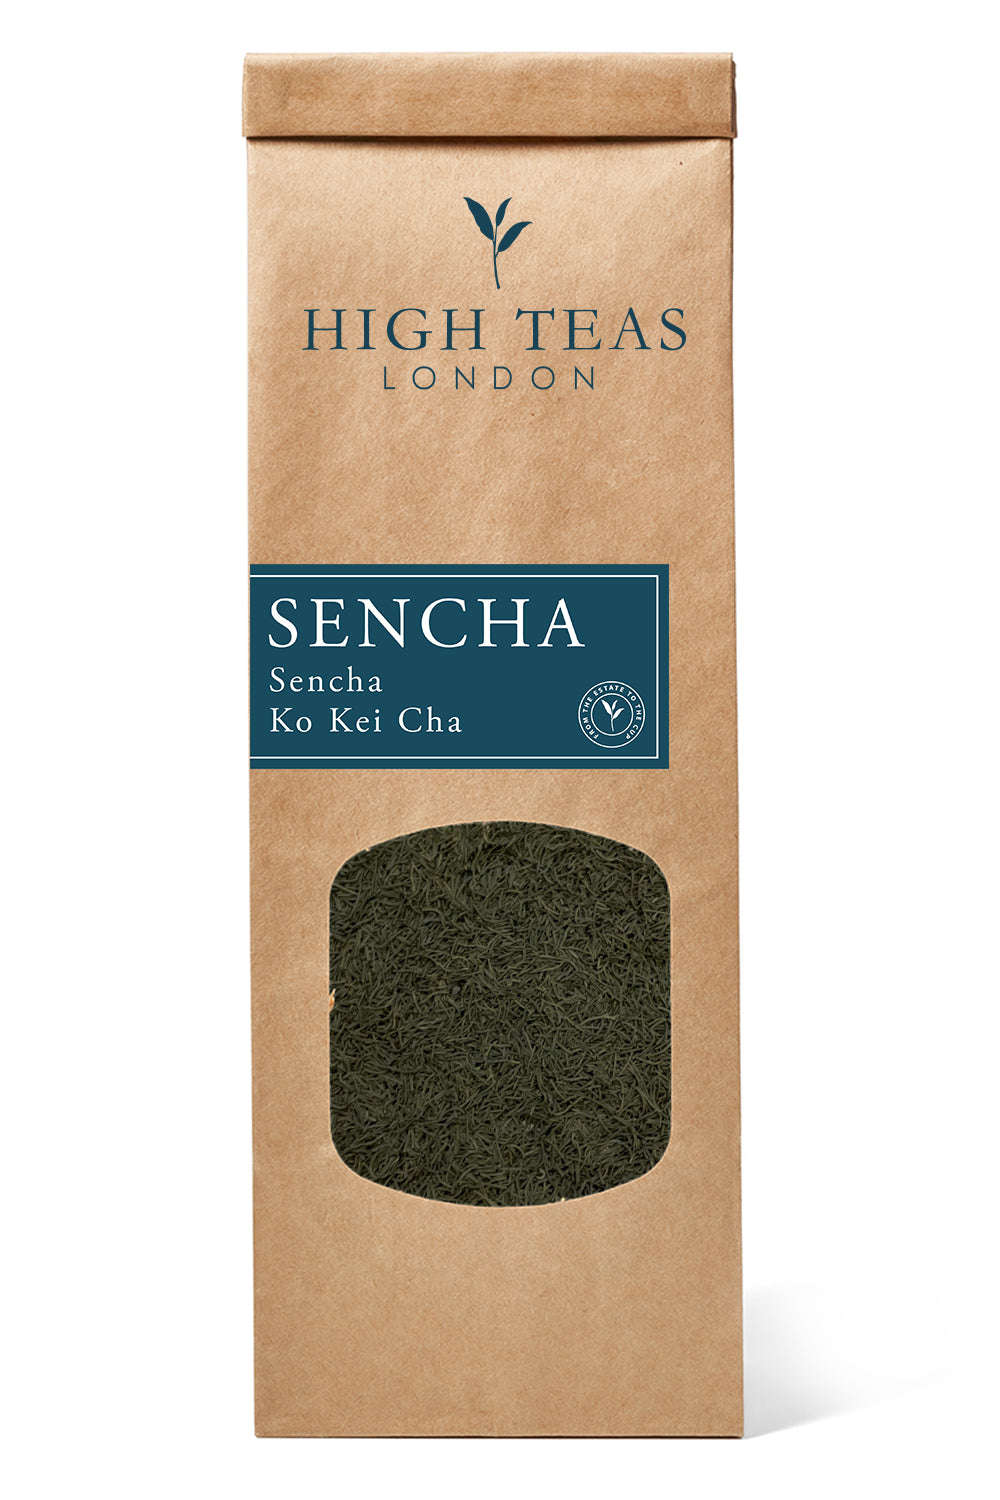 Sencha Ko Kei Cha "Special"-50g-Loose Leaf Tea-High Teas